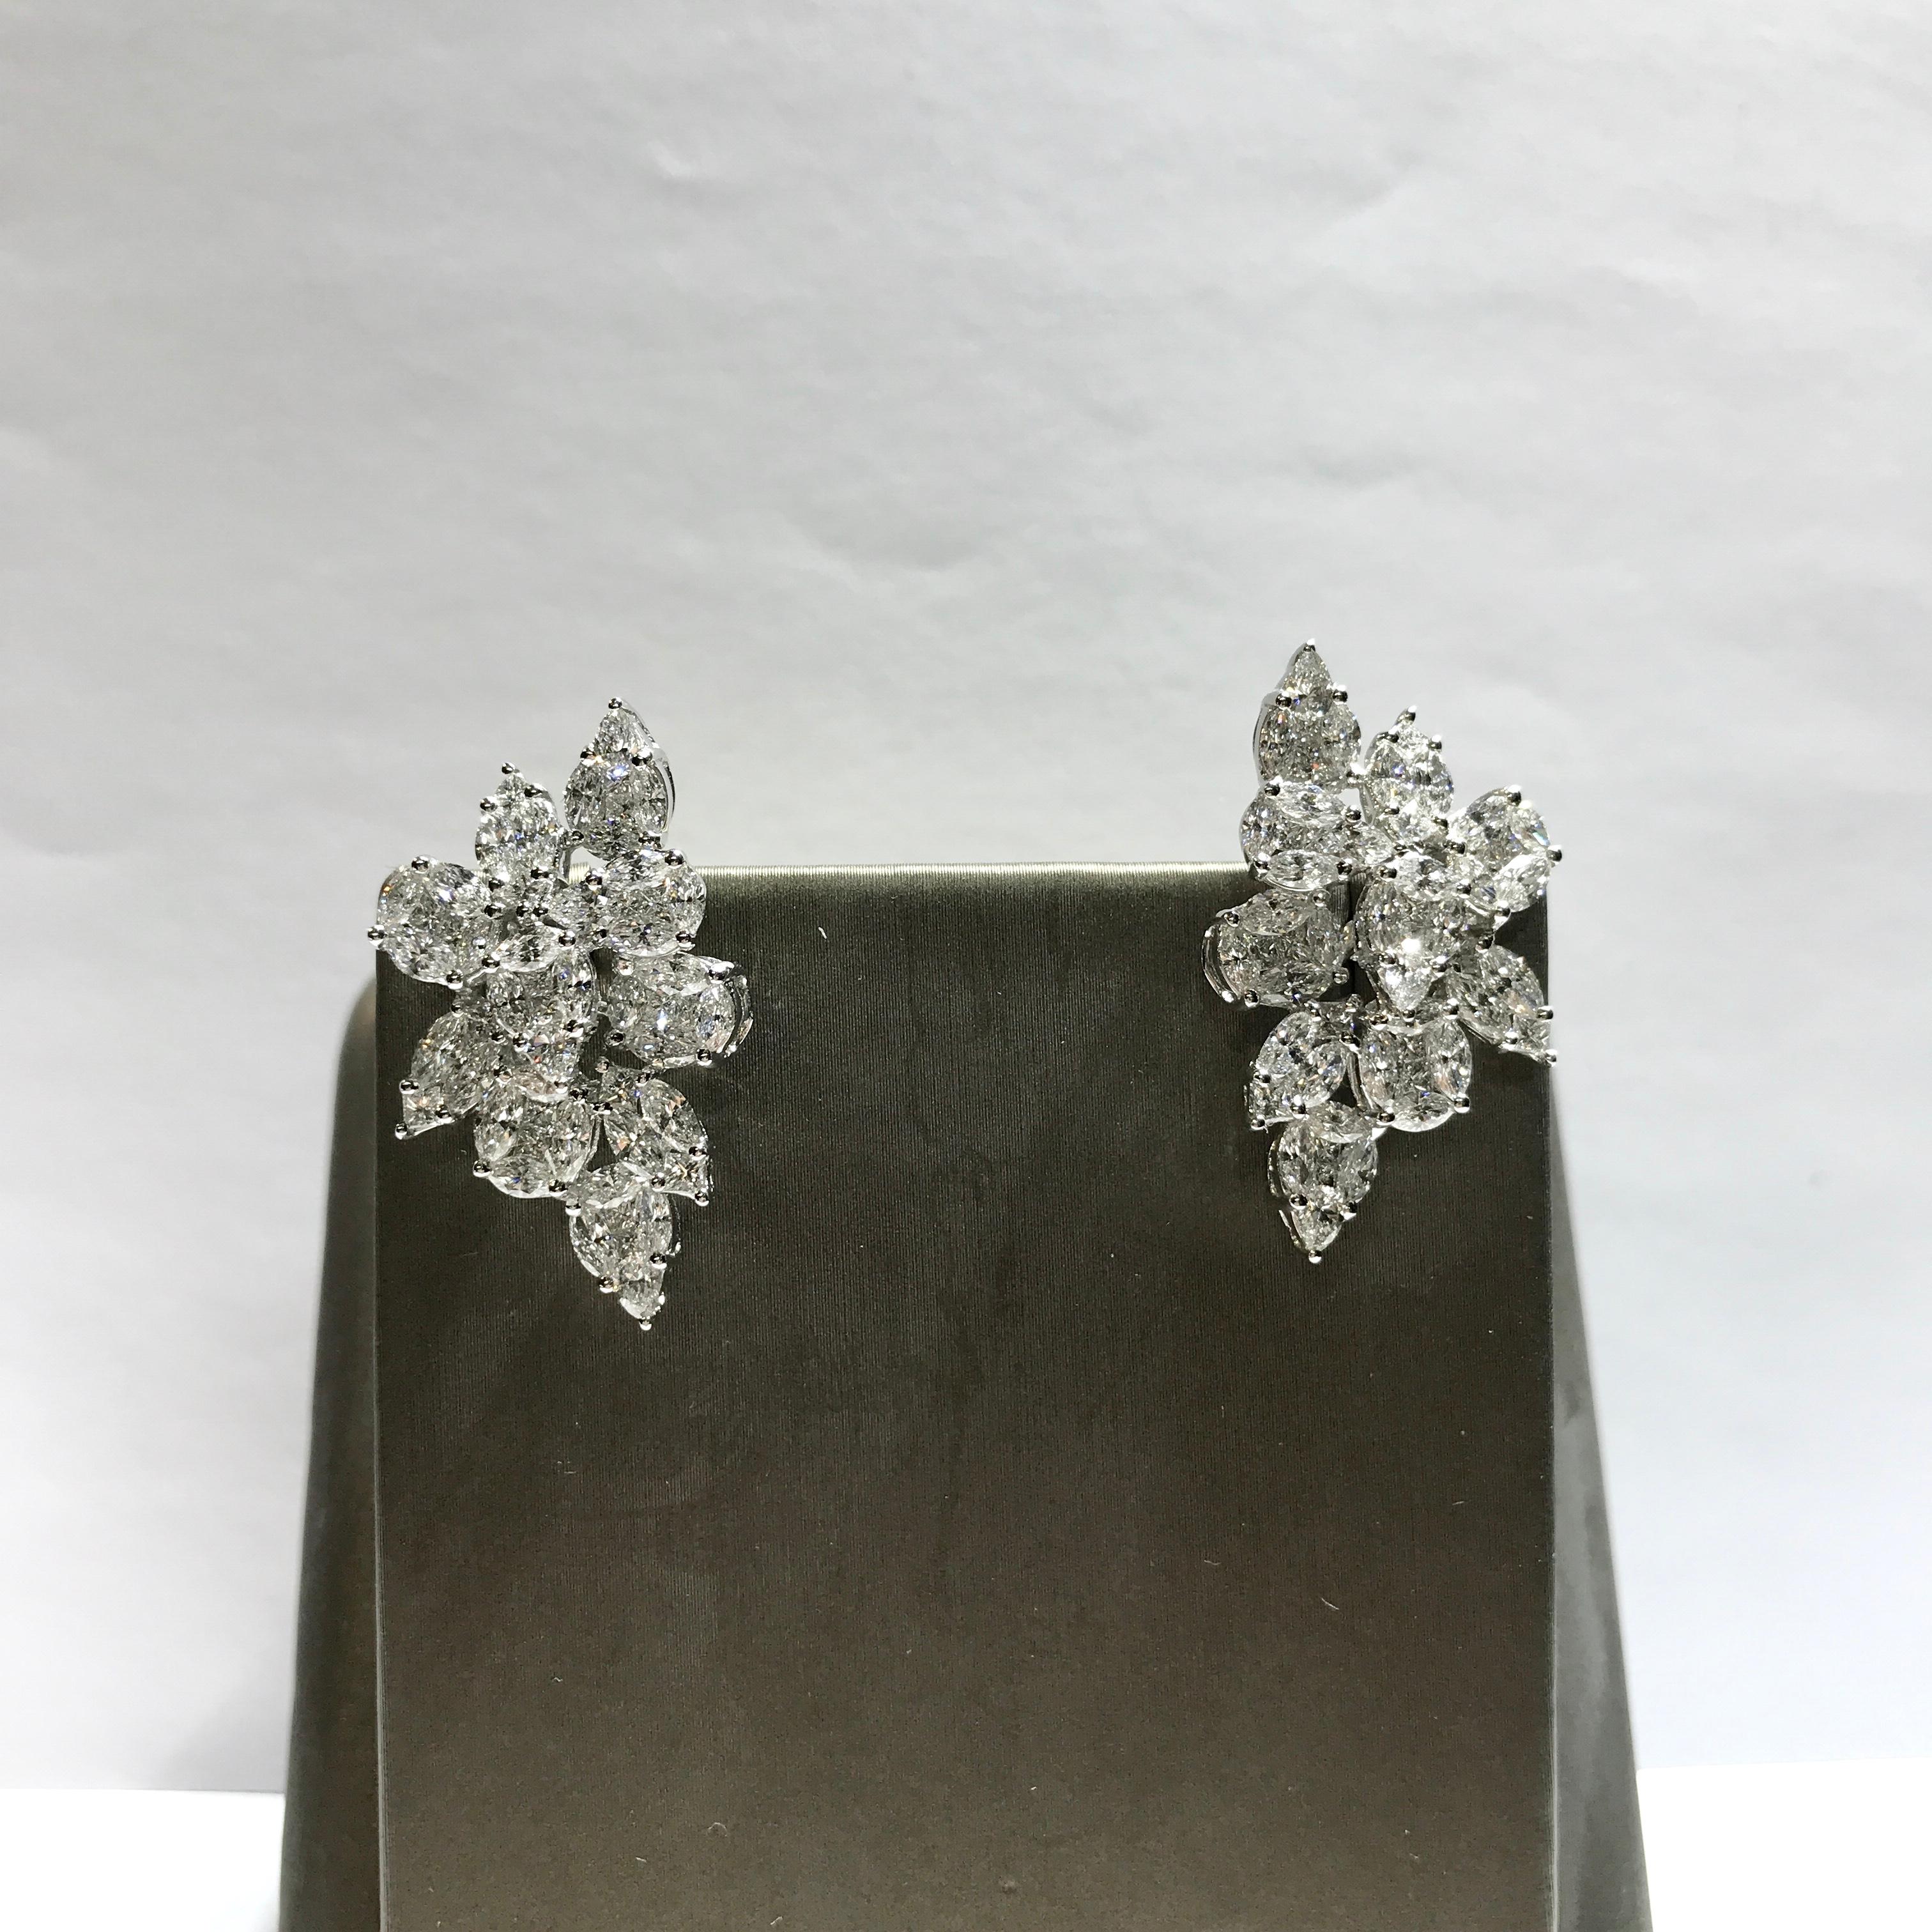 GILIN-18kw HARRY WINSTON style cluster diamond earrings. Stunning signature Harry Winston 
style diamond Cluster earring-Feminine ,elegant, dazzling!

Height: 30 mm / Width: 17.61 mm / Depth: 3.32 mm
Total Diamond Weight: 5.98ct / MQ White Diamond